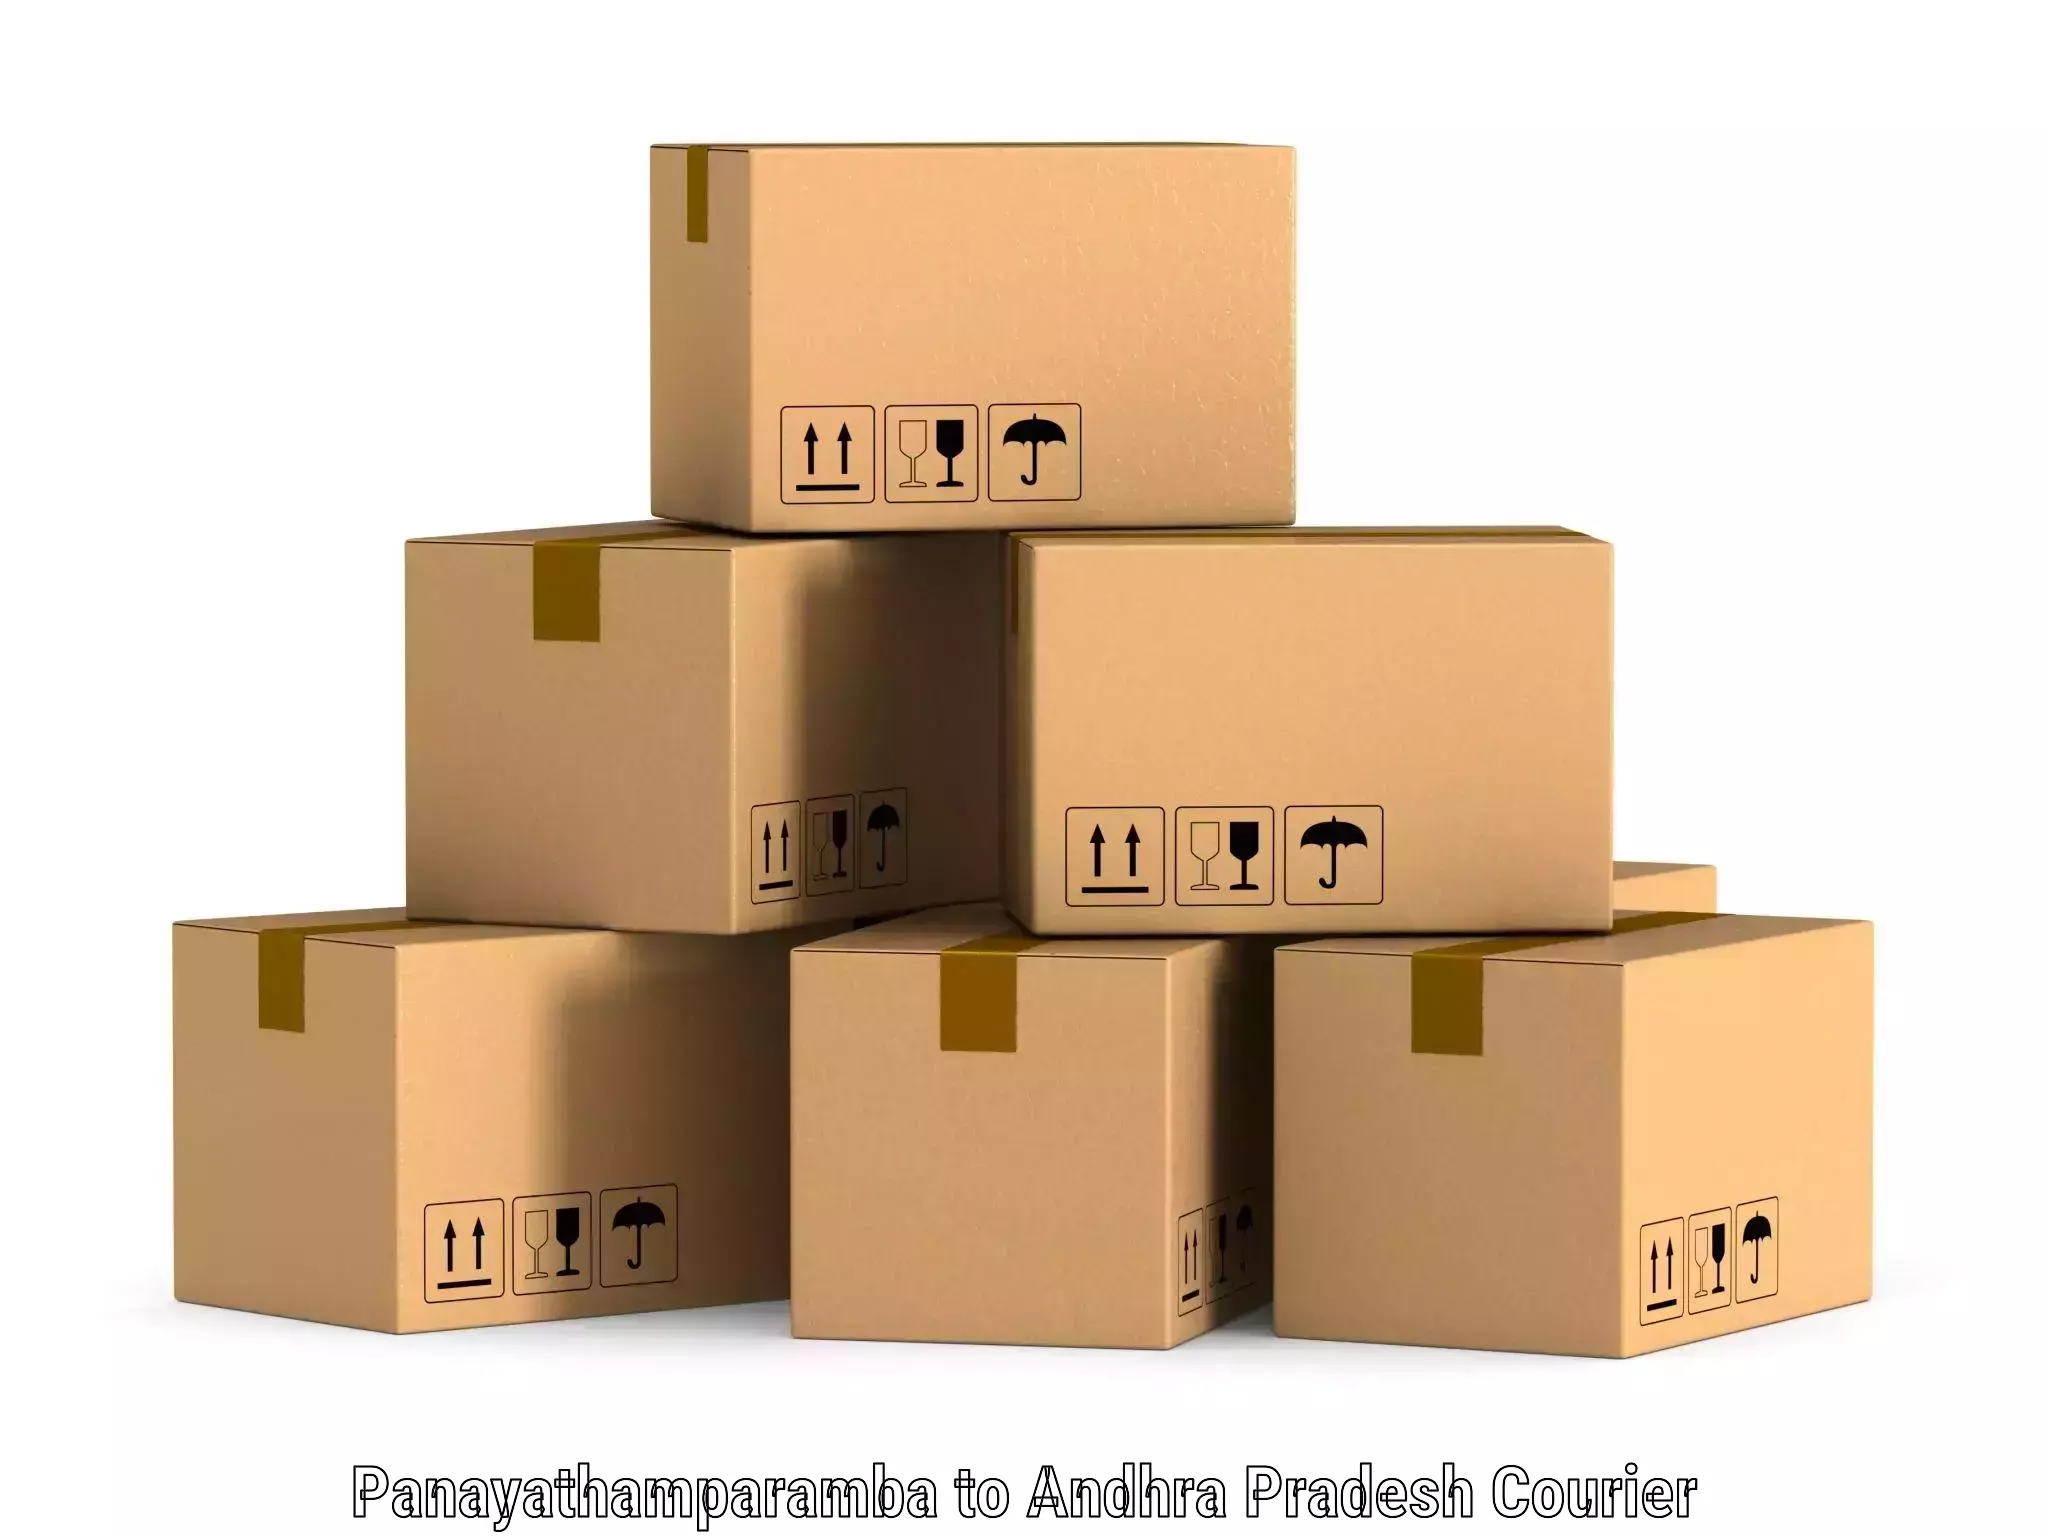 Global logistics network Panayathamparamba to Andhra Pradesh